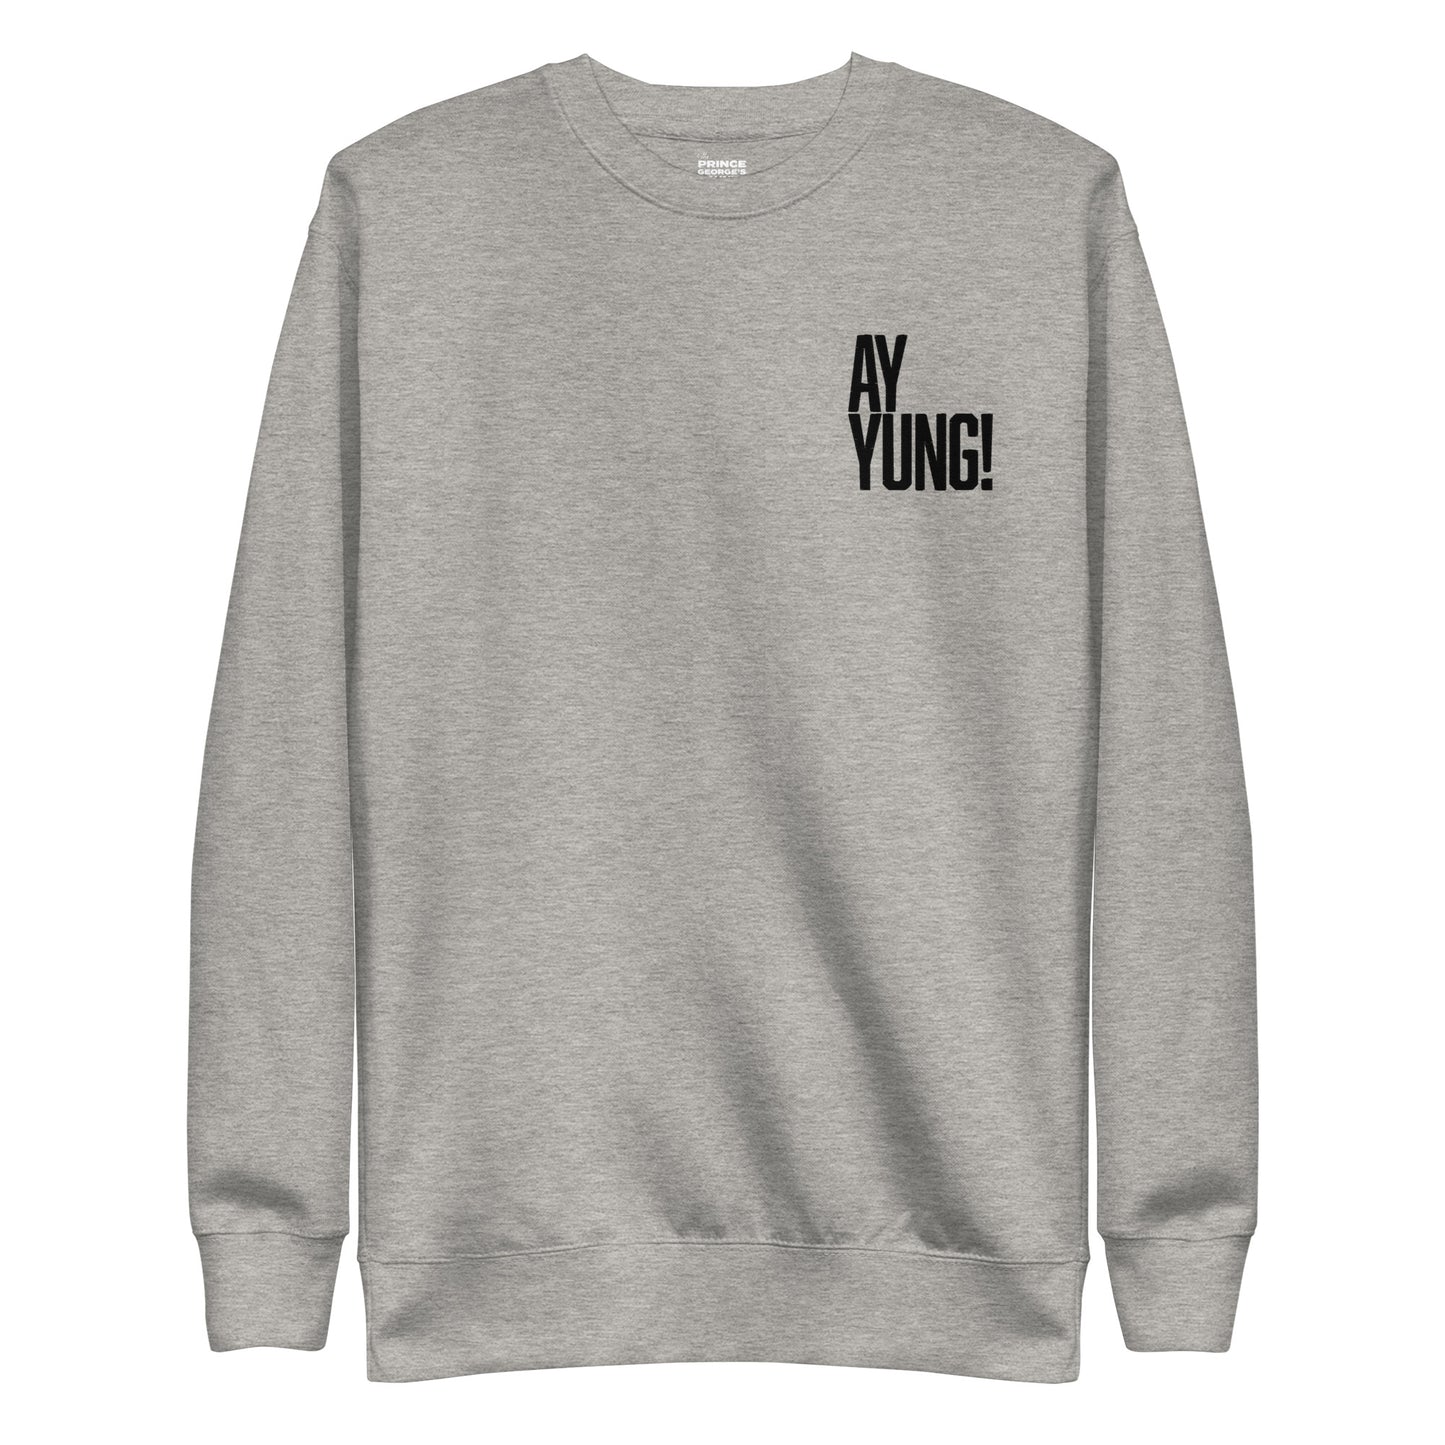 Ay Yung! Stitched Unisex Premium Sweatshirt